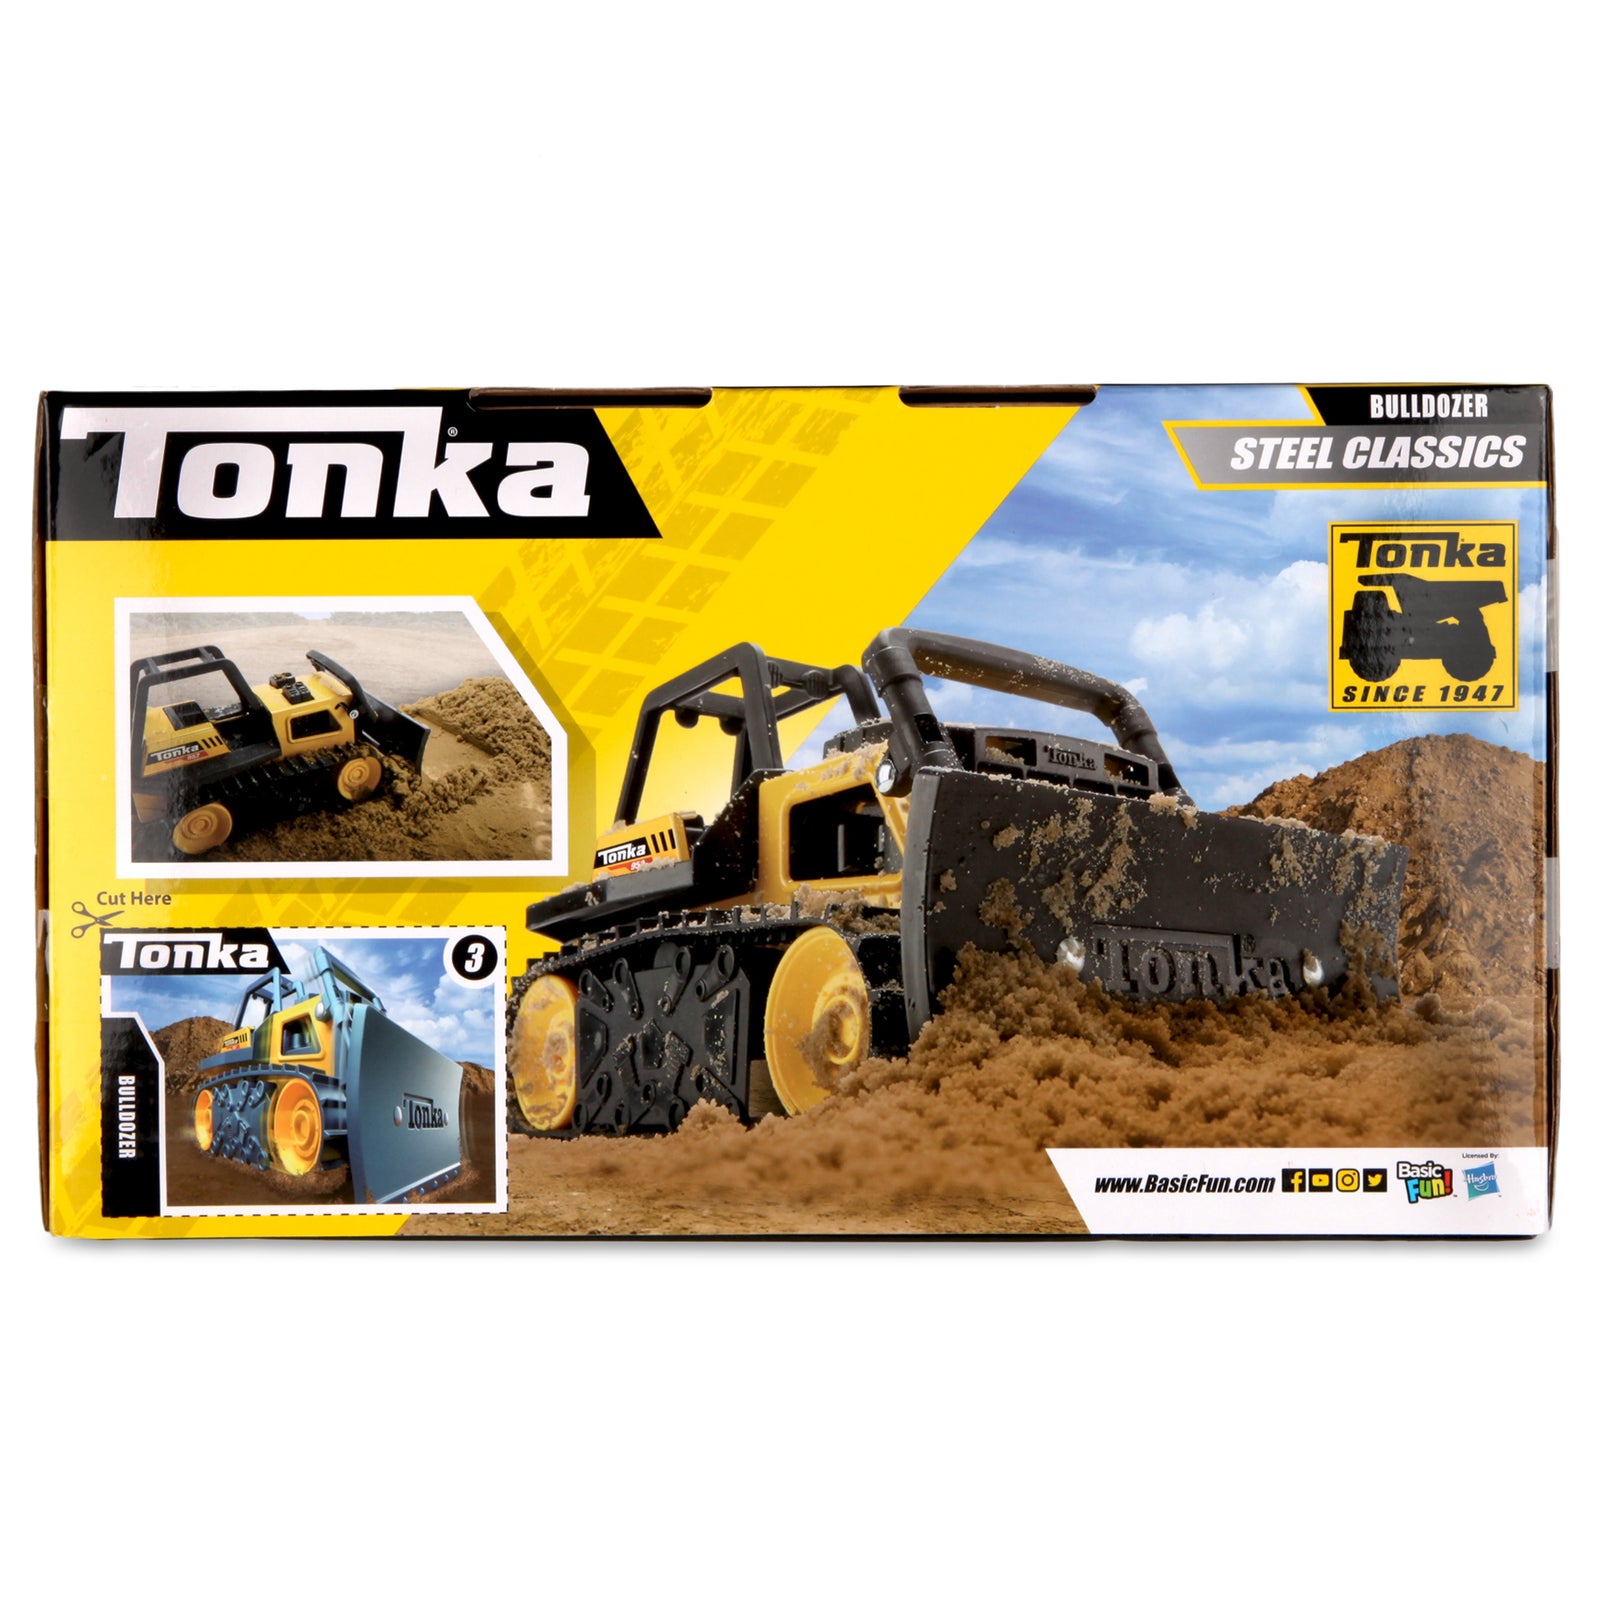 Tonka: Steel Classics - Bull Dozer